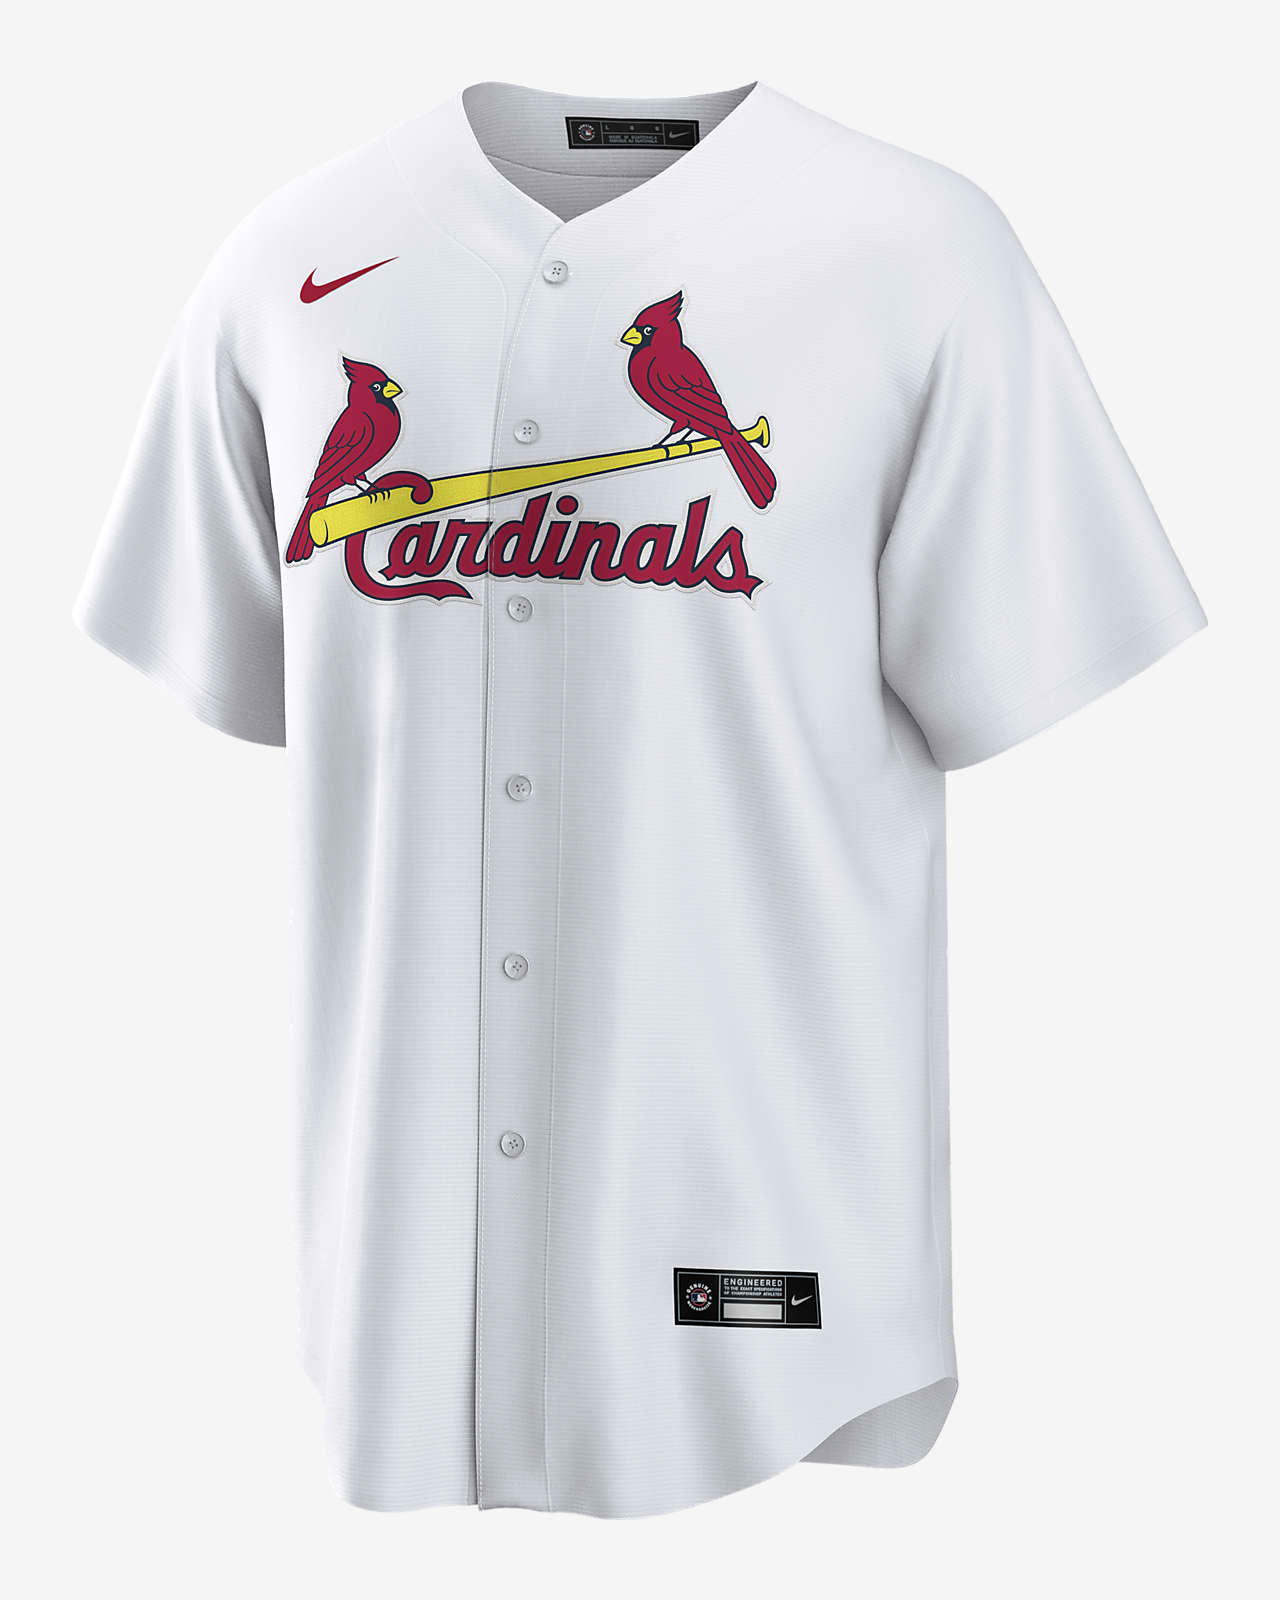 MLB St. Louis Cardinals (Nolan Arenado) Men's Replica Baseball Jersey.